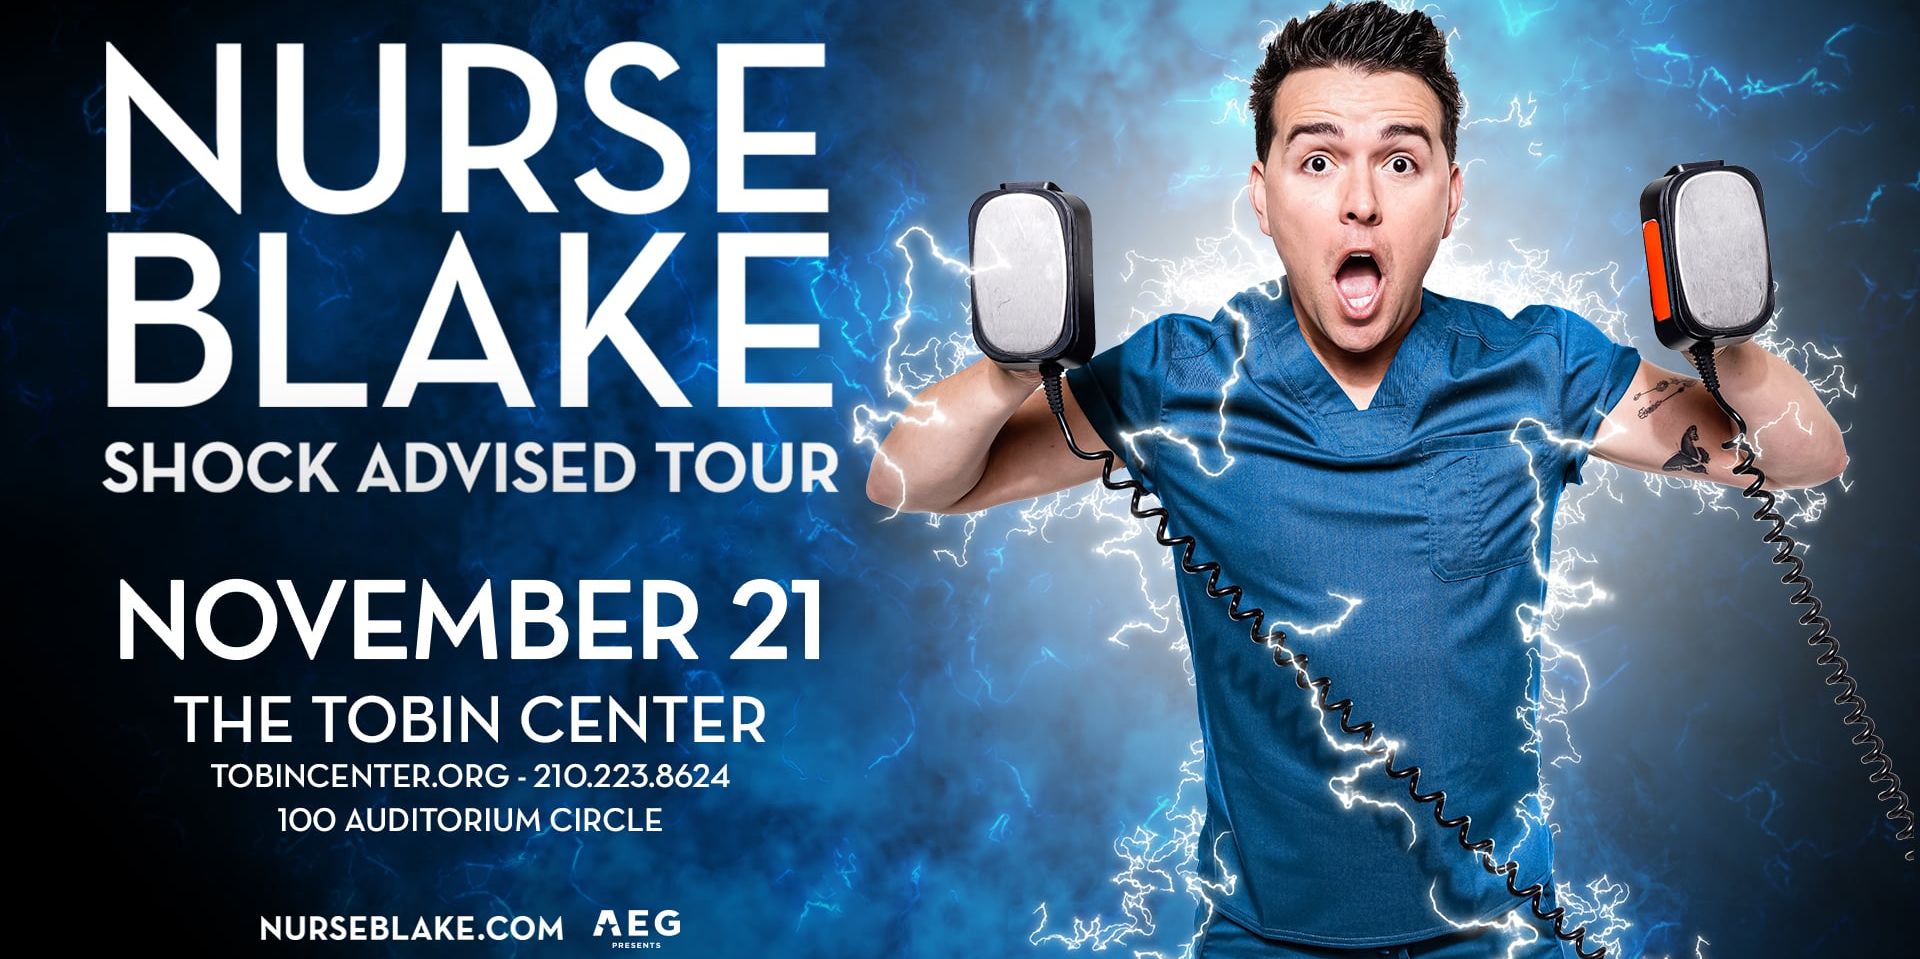 Nurse Blake: Shock Advised Tour promotional image